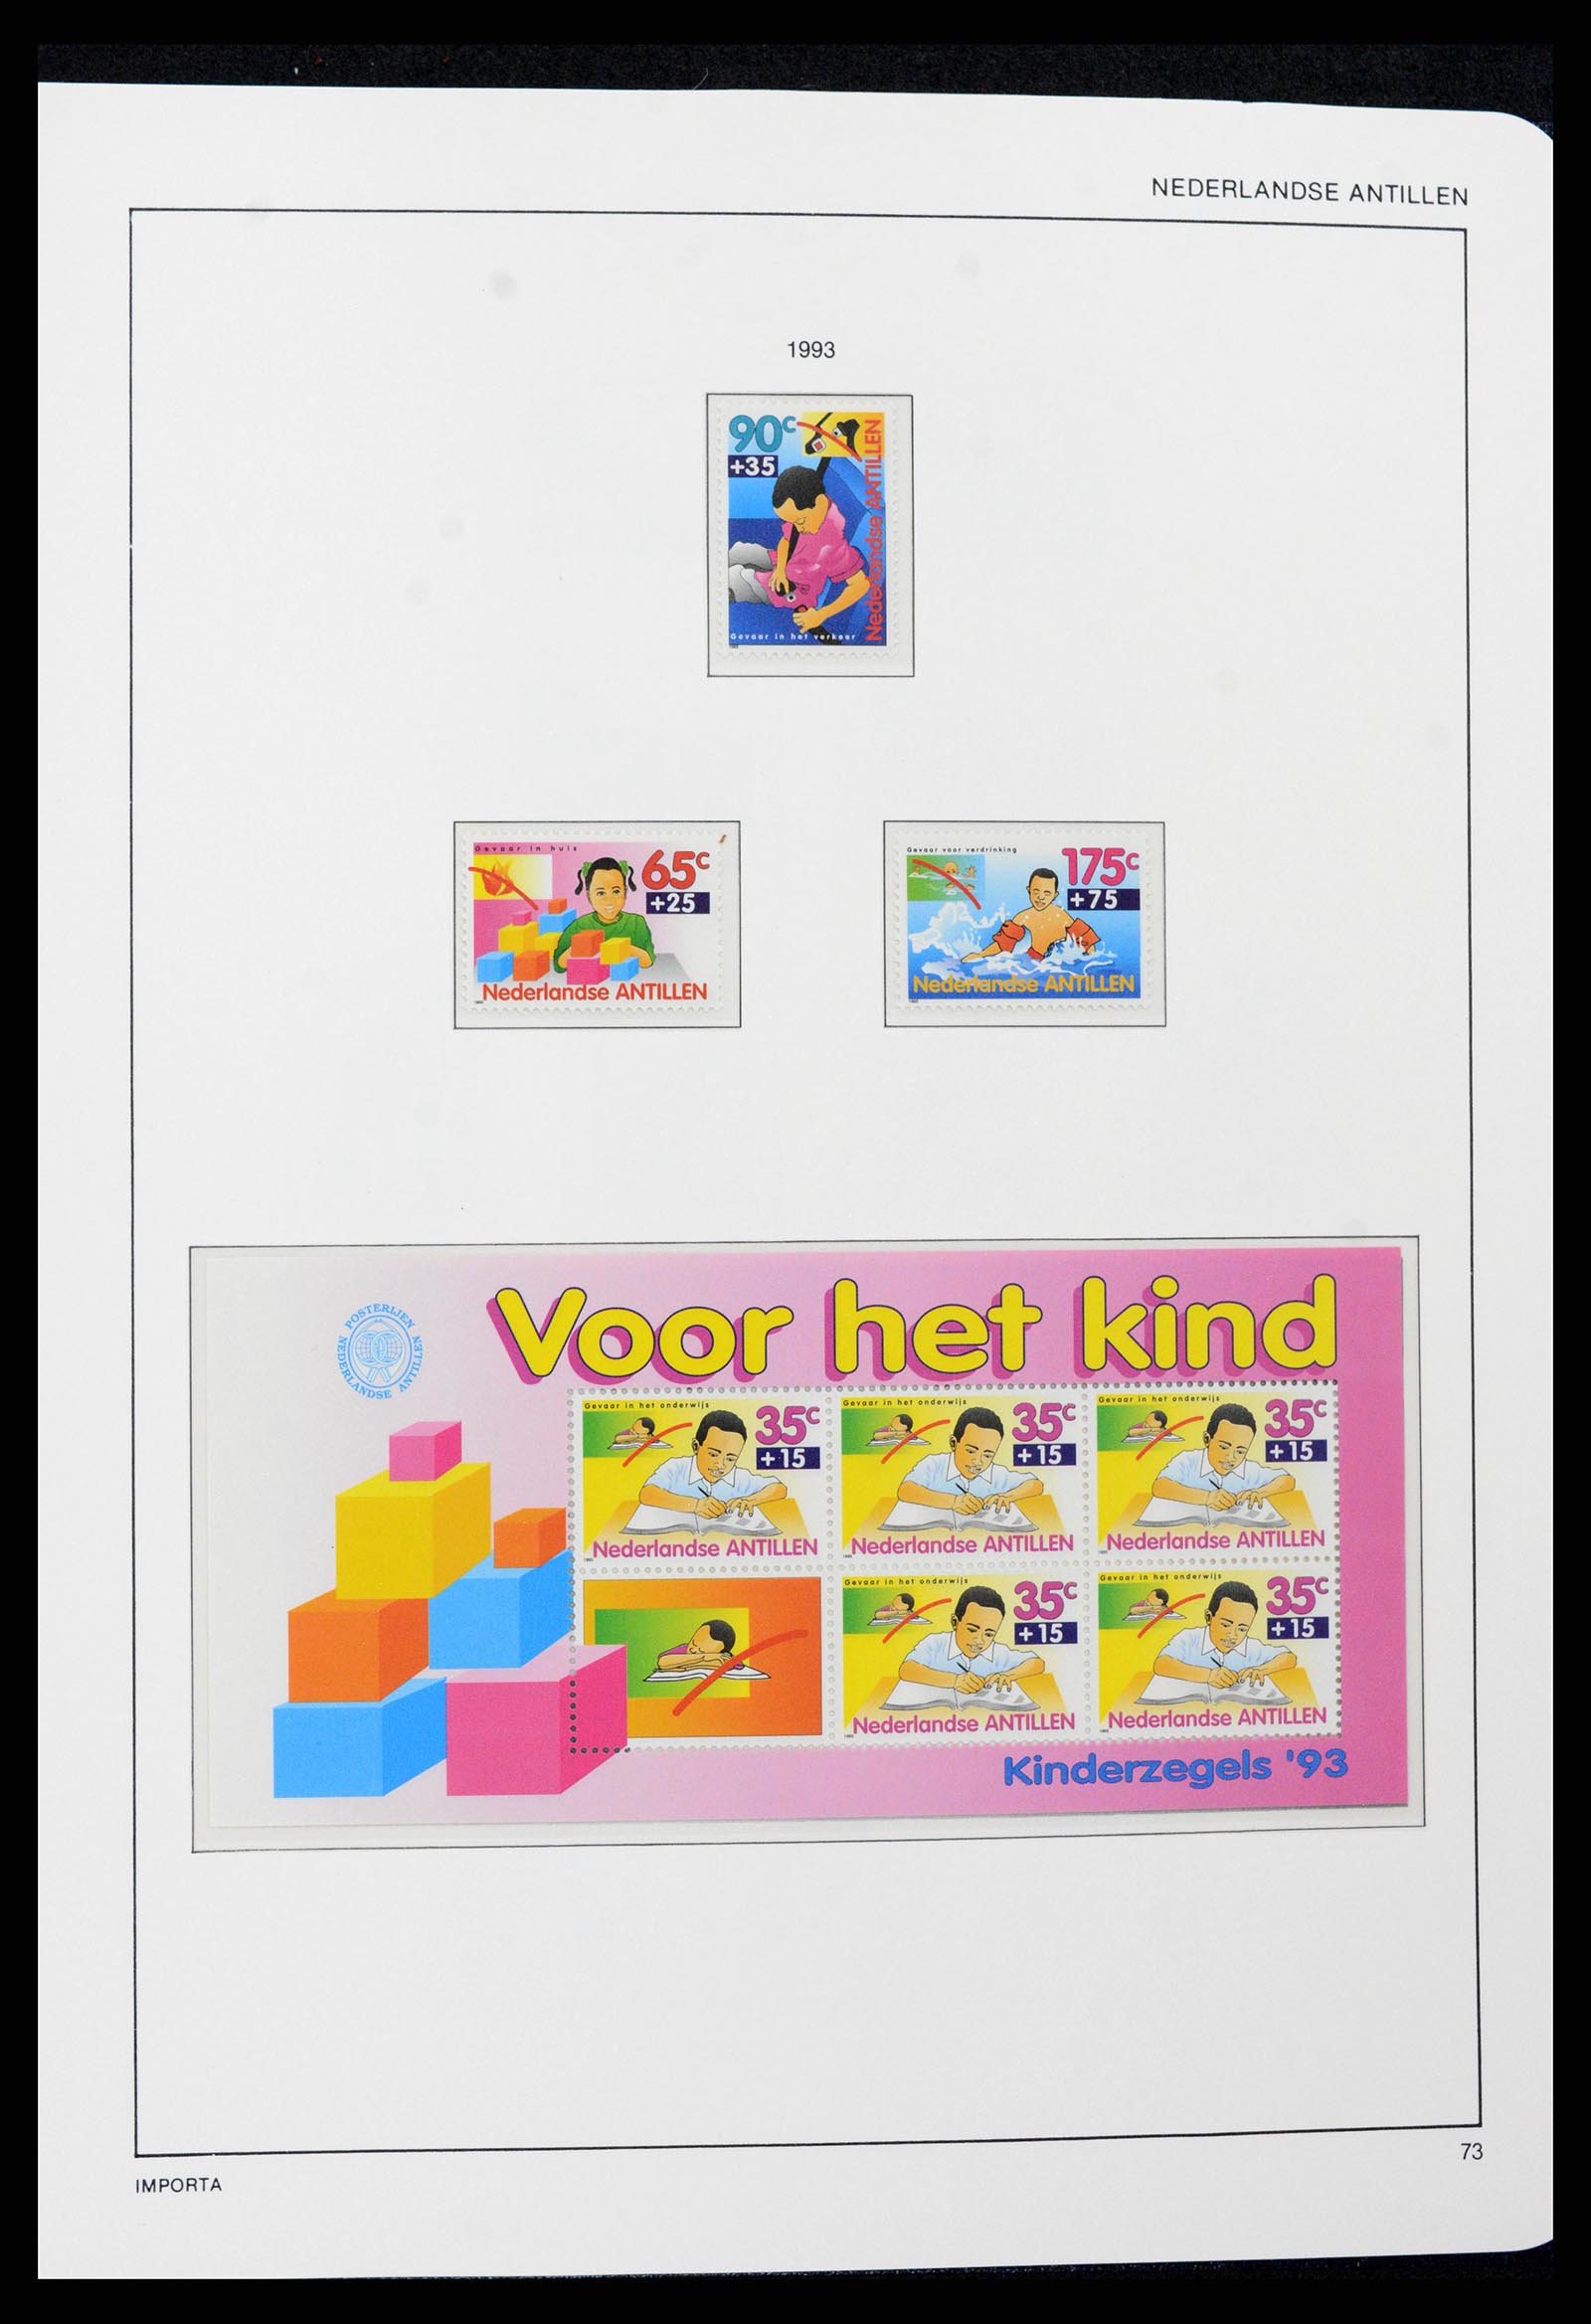 37693 074 - Stamp collection 37693 Netherlands Antilles 1949-2001.